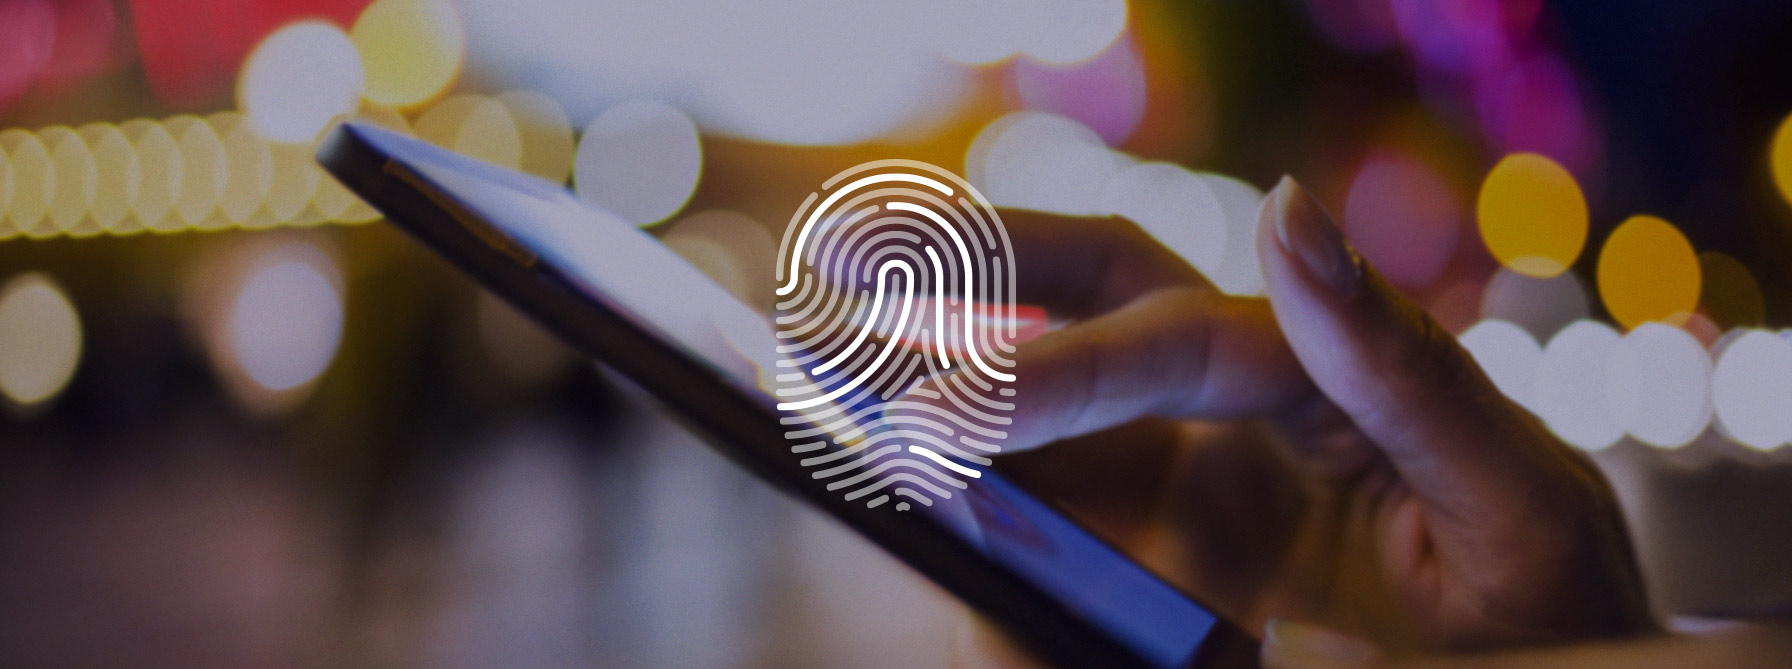 Why finance brands should embrace biometrics